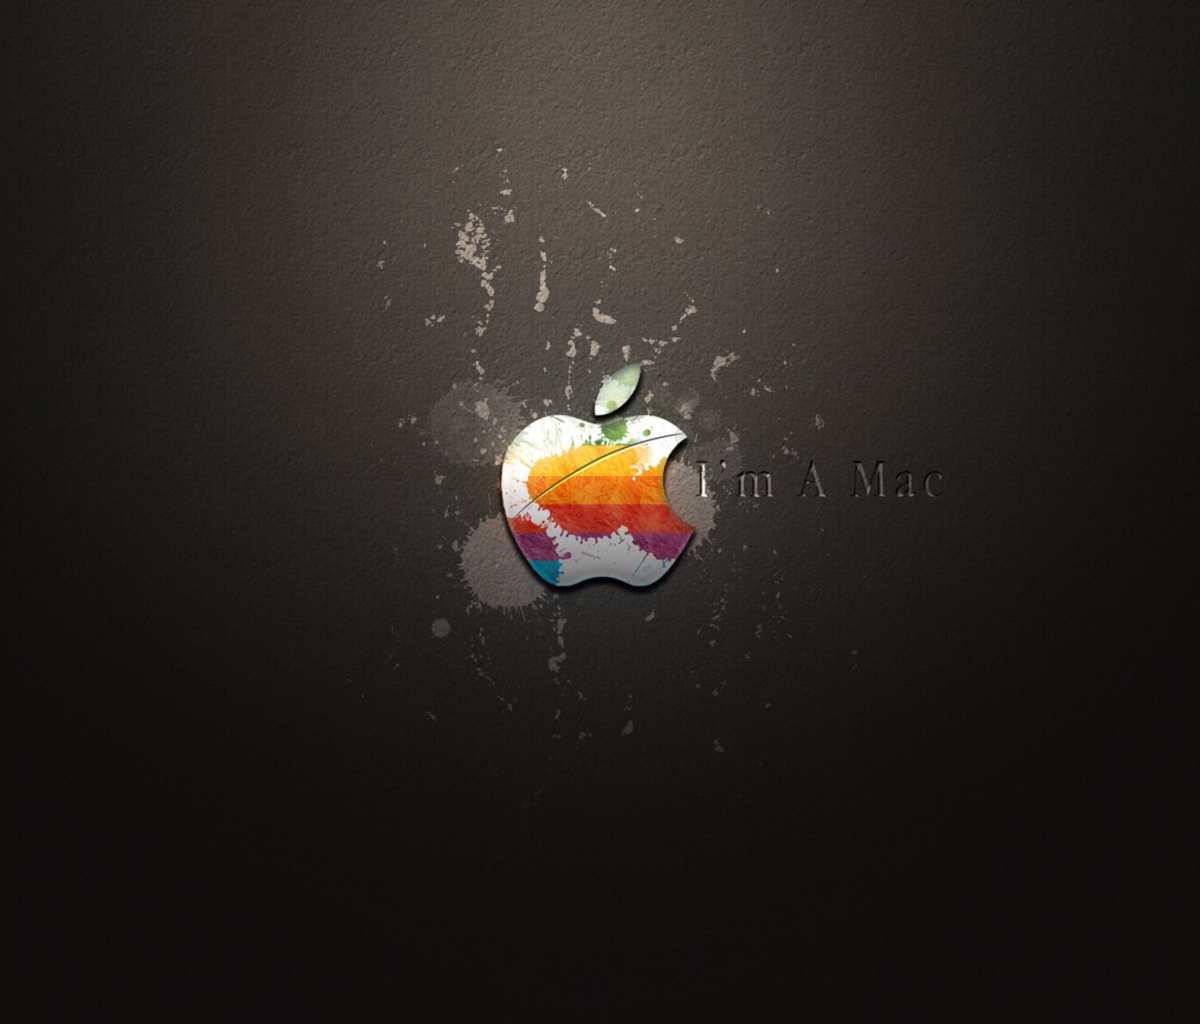 Das Apple I'm A Mac Wallpaper 1200x1024